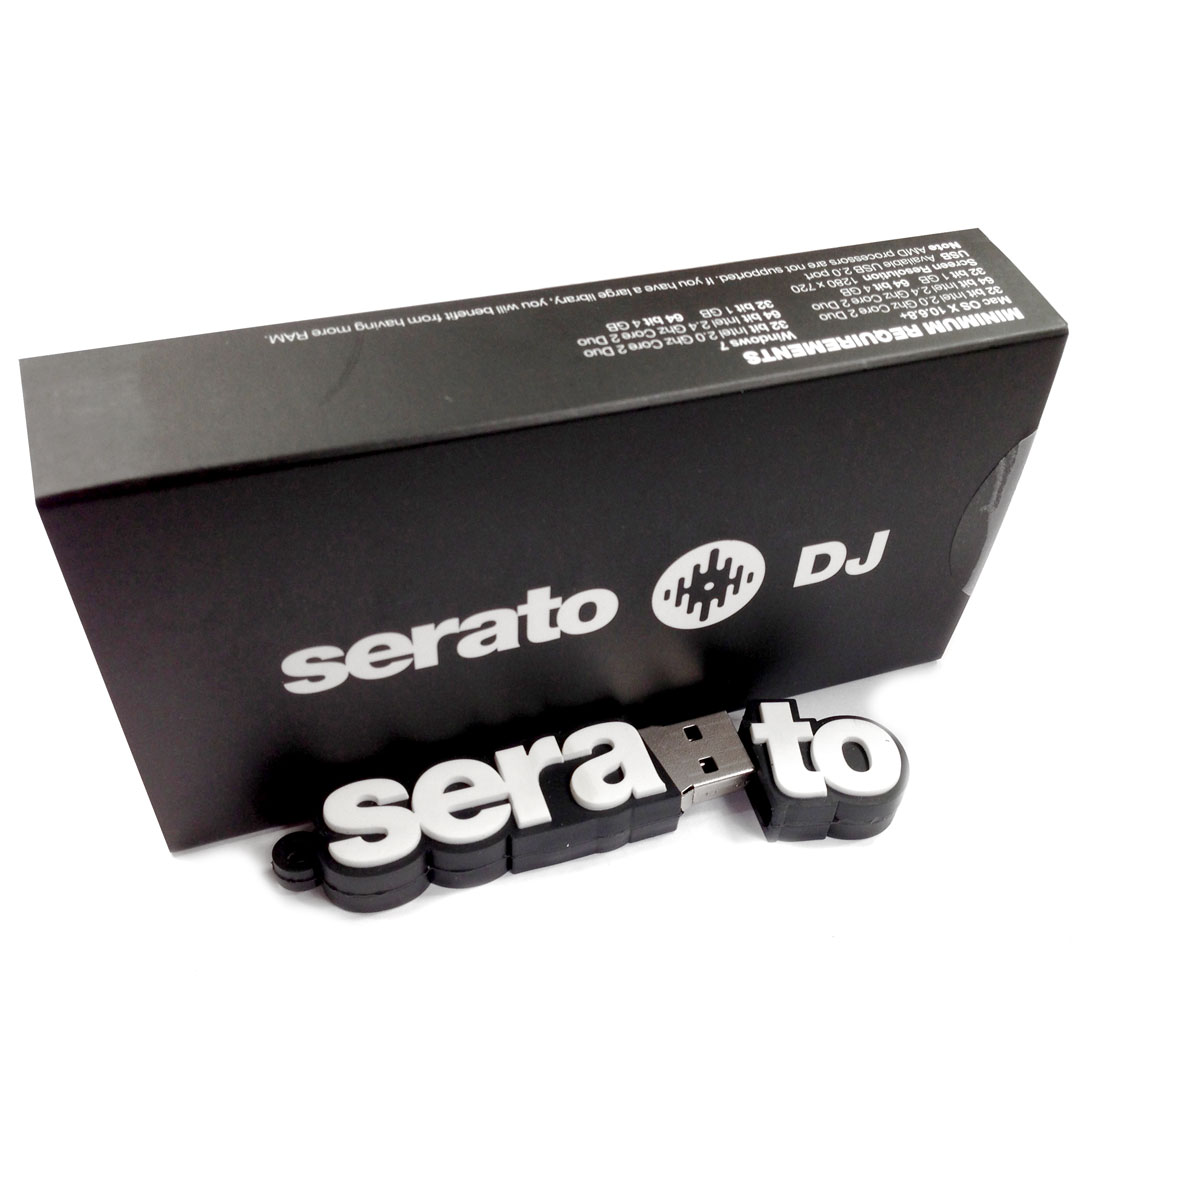 Serato DJ Upgrade (Boxed Product) » QUARTZ LOCKED PRODUCTIONS